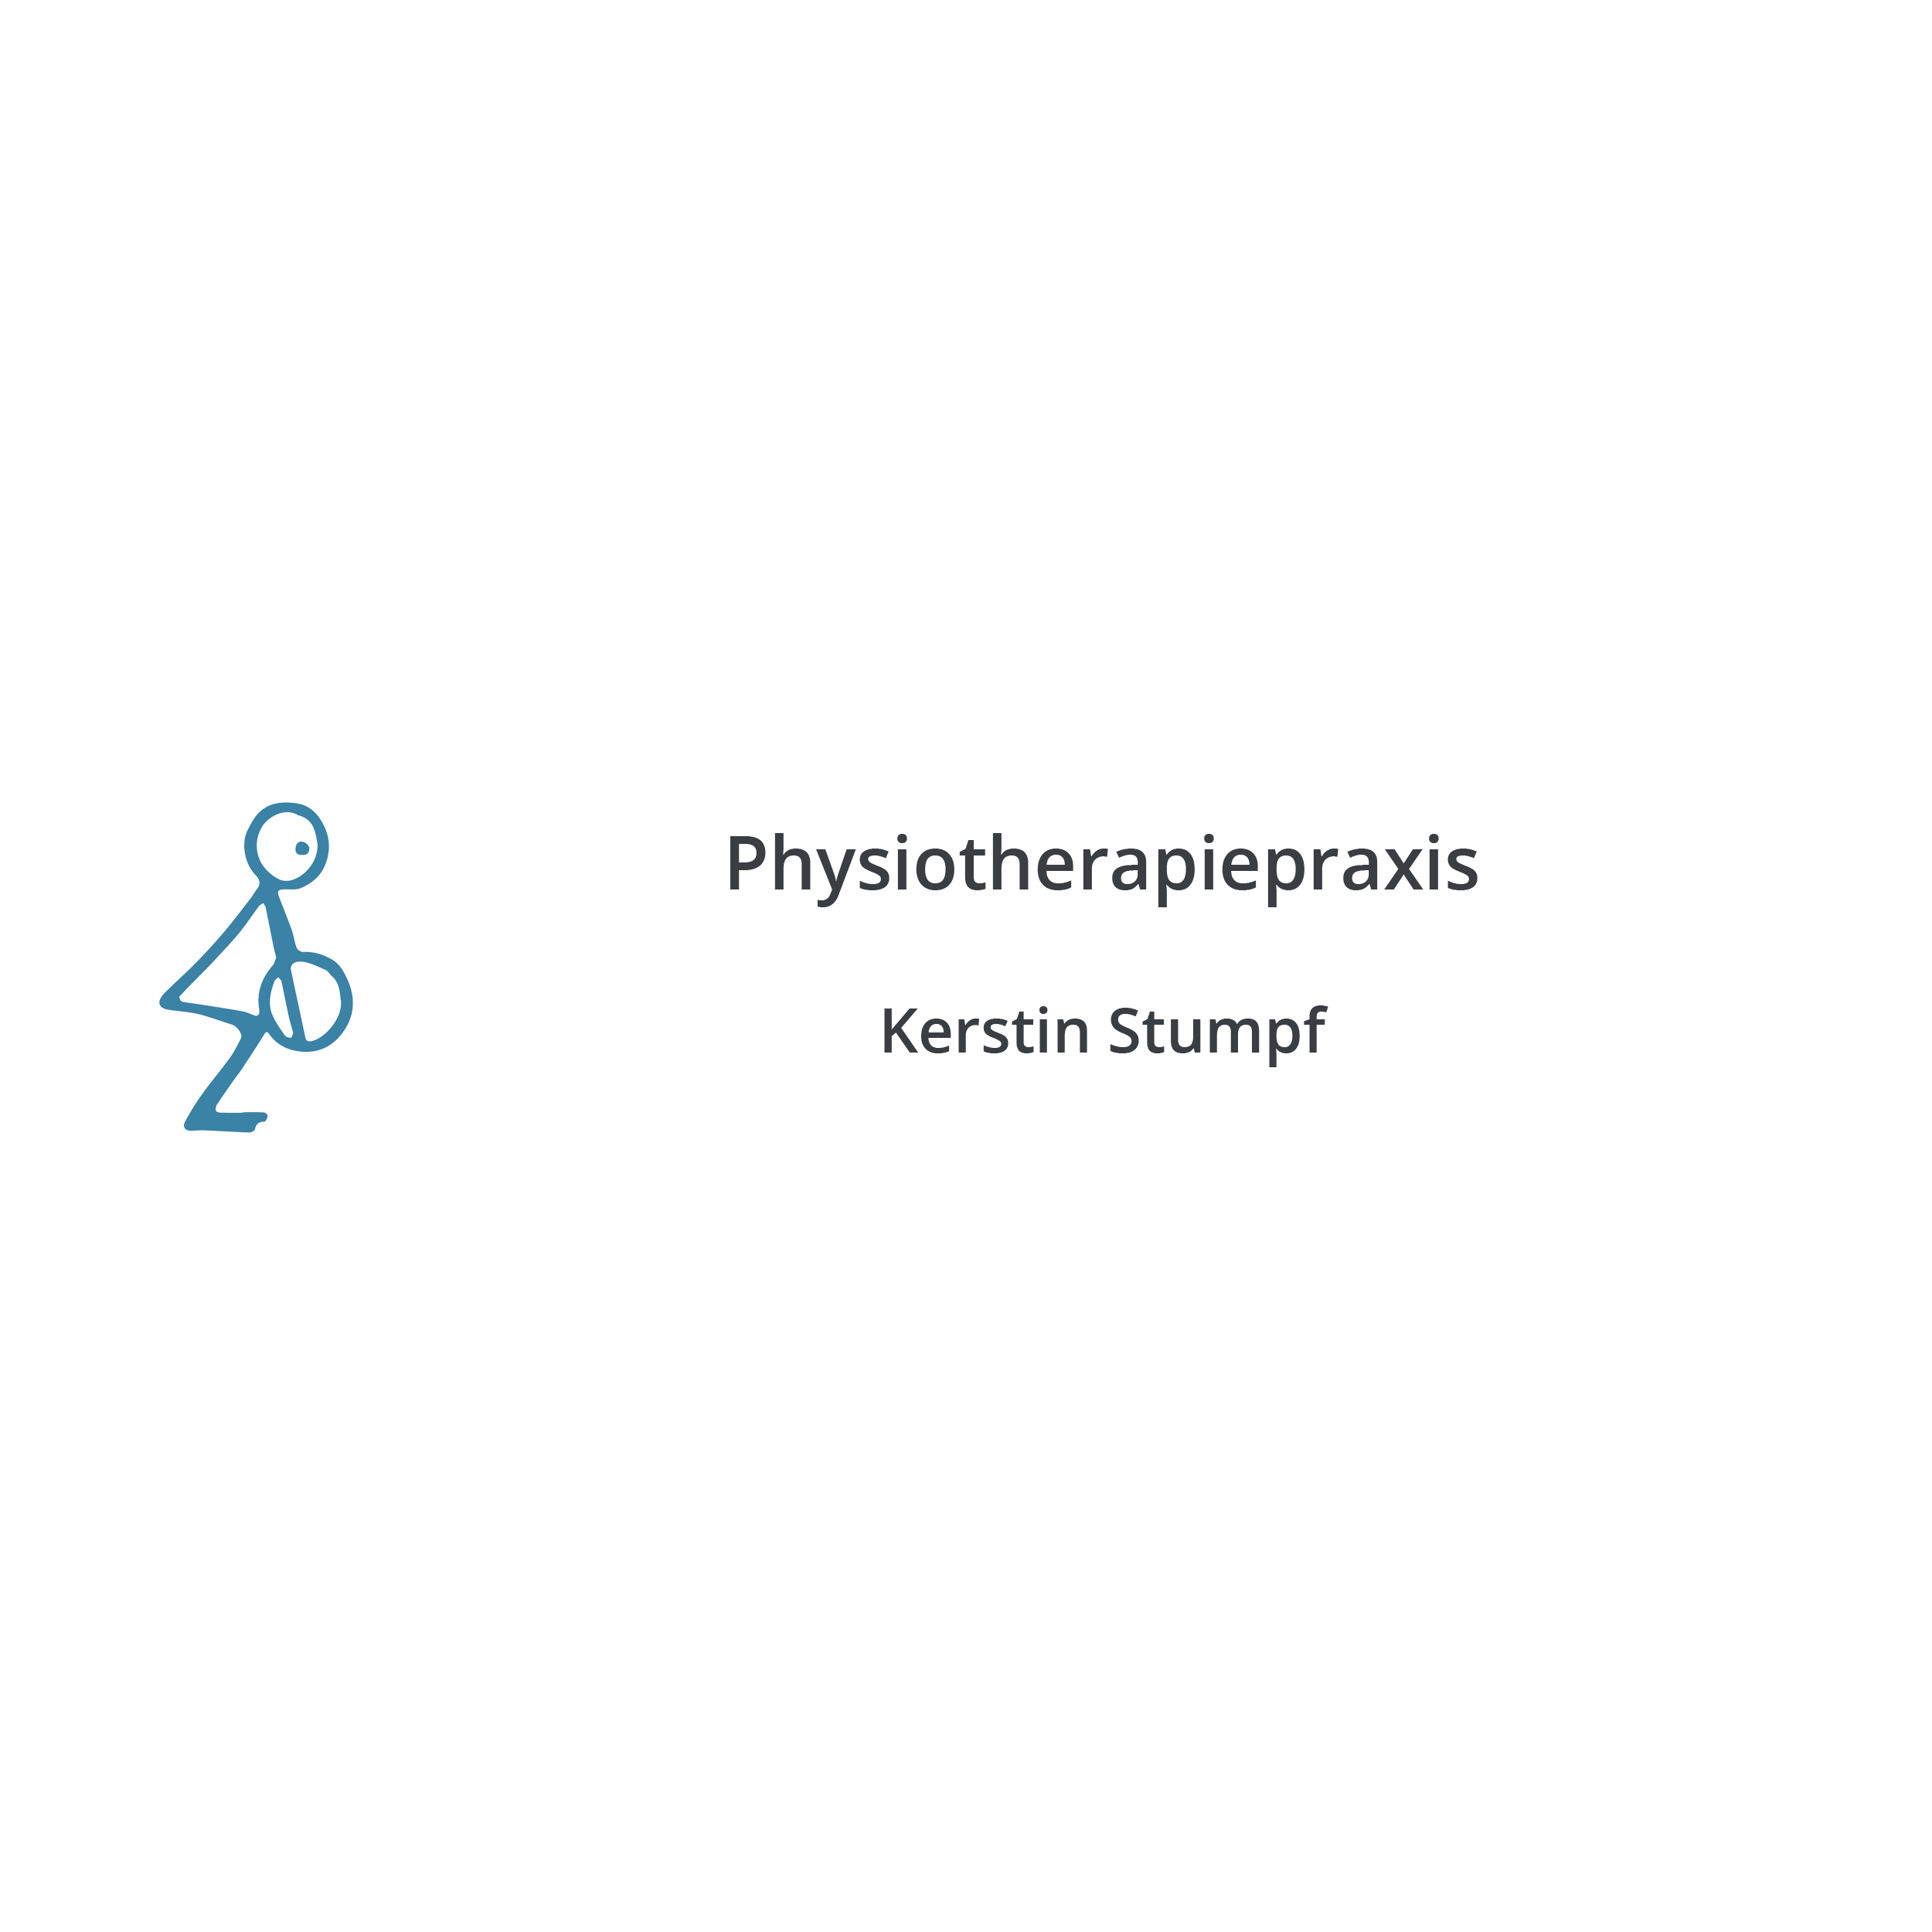 Physiotherapiepraxis Kerstin Stumpf in Göttingen - Logo